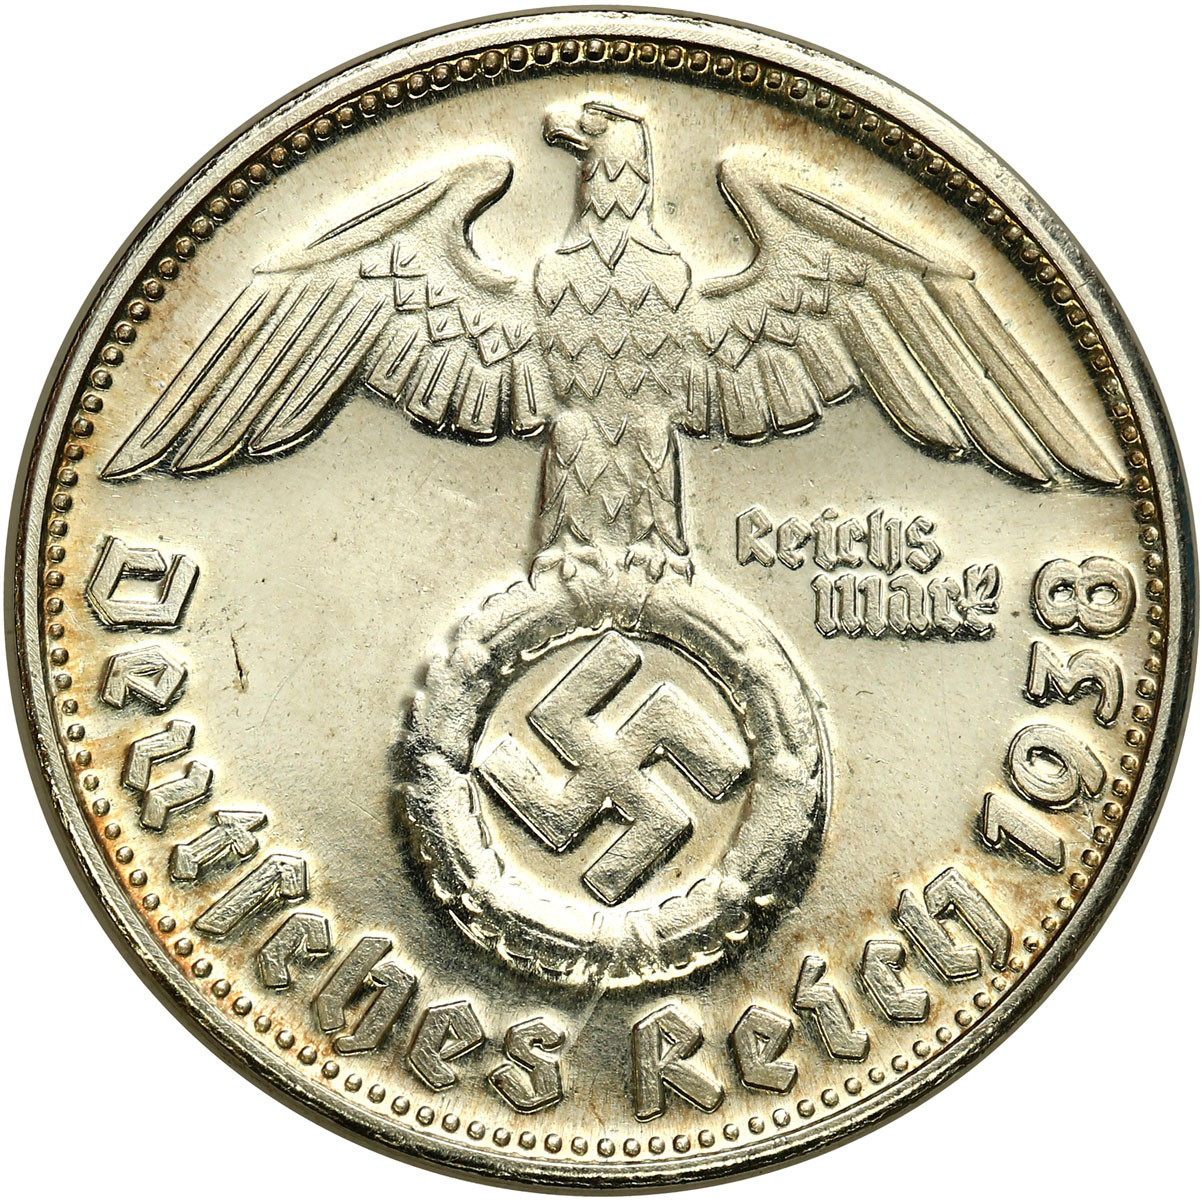 niemcy-iii-rzesza-medal-a-hitler-1938-srebro